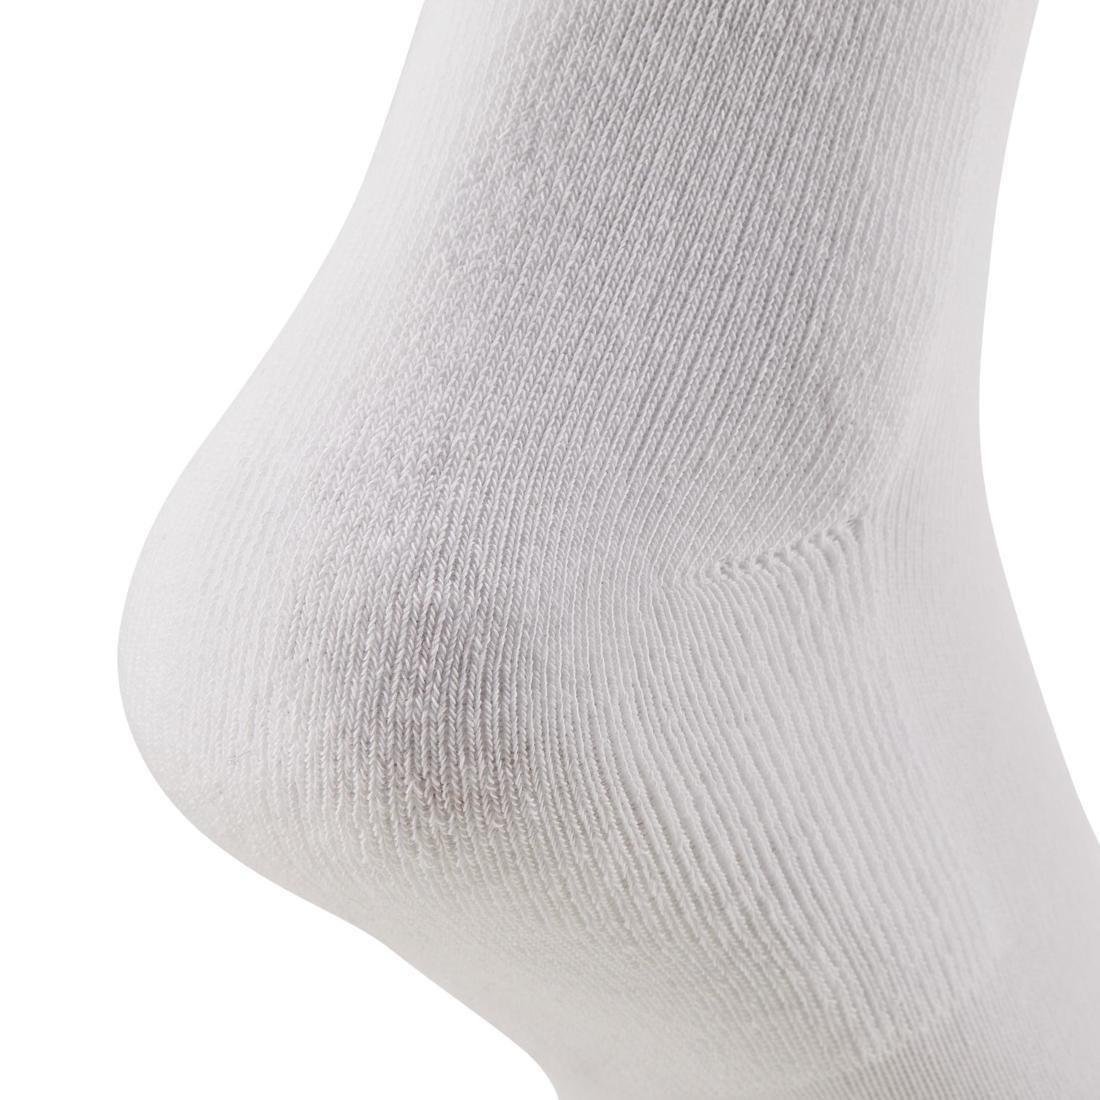 ARTENGO - High Sports Socks Rs 100 Tri-Pack, White